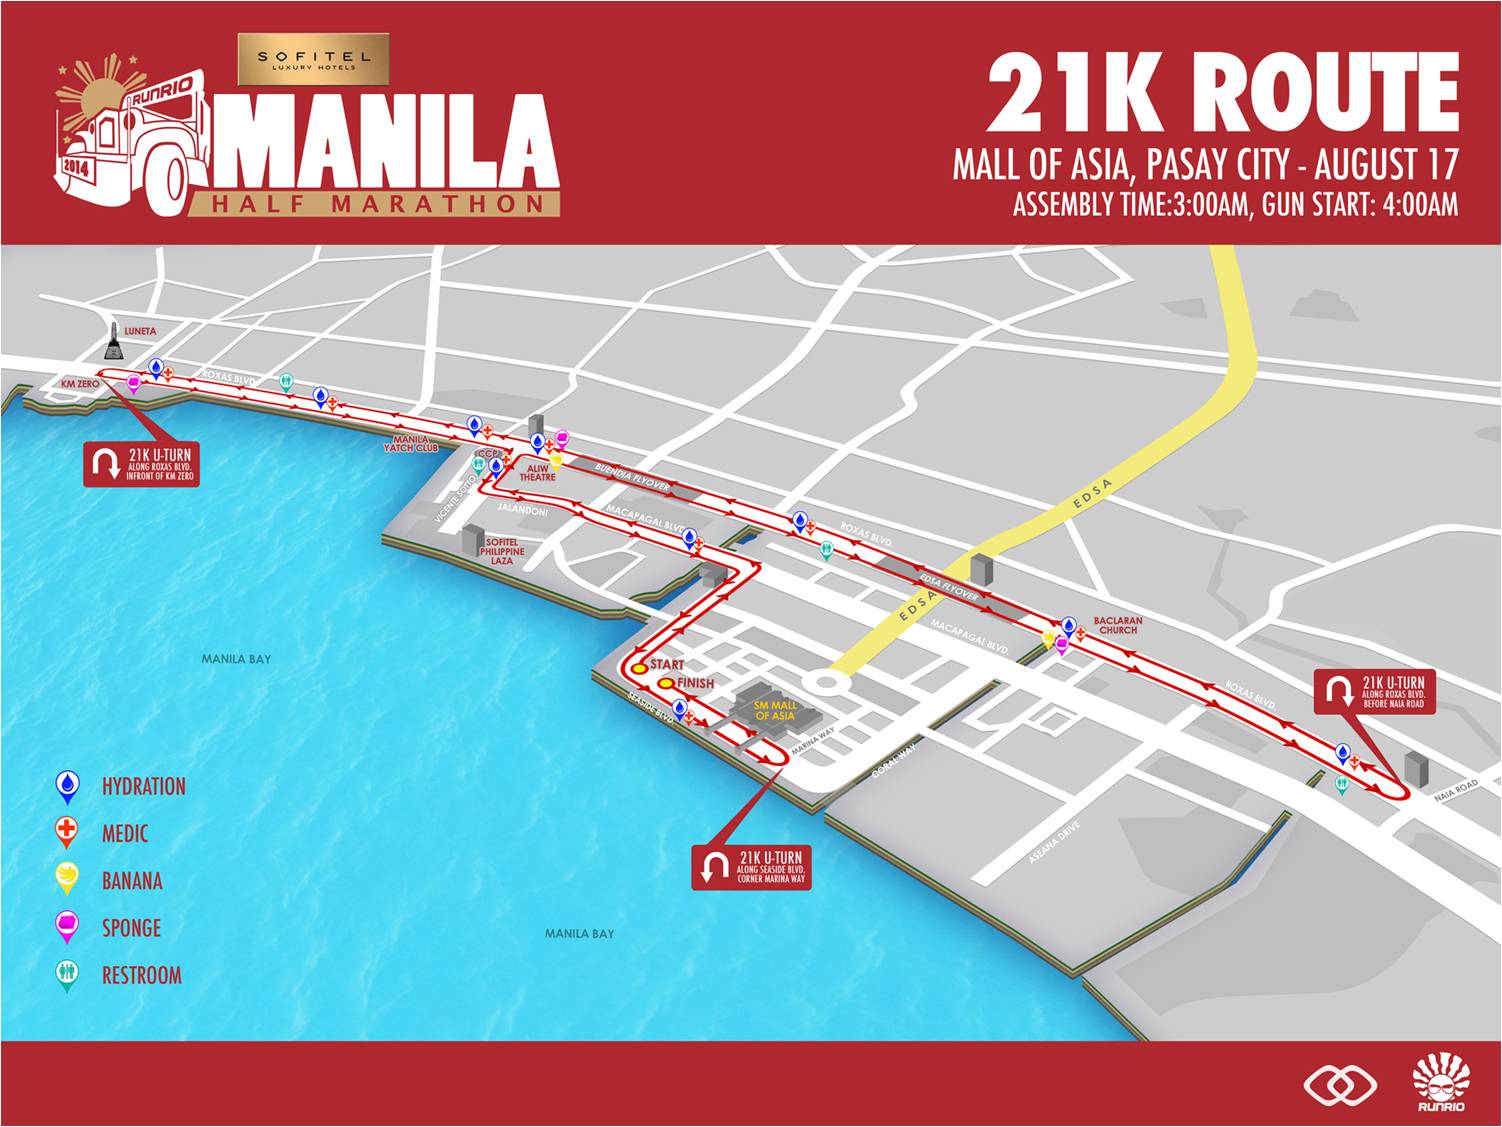 Sofitel Manila Half Marathon 21k route